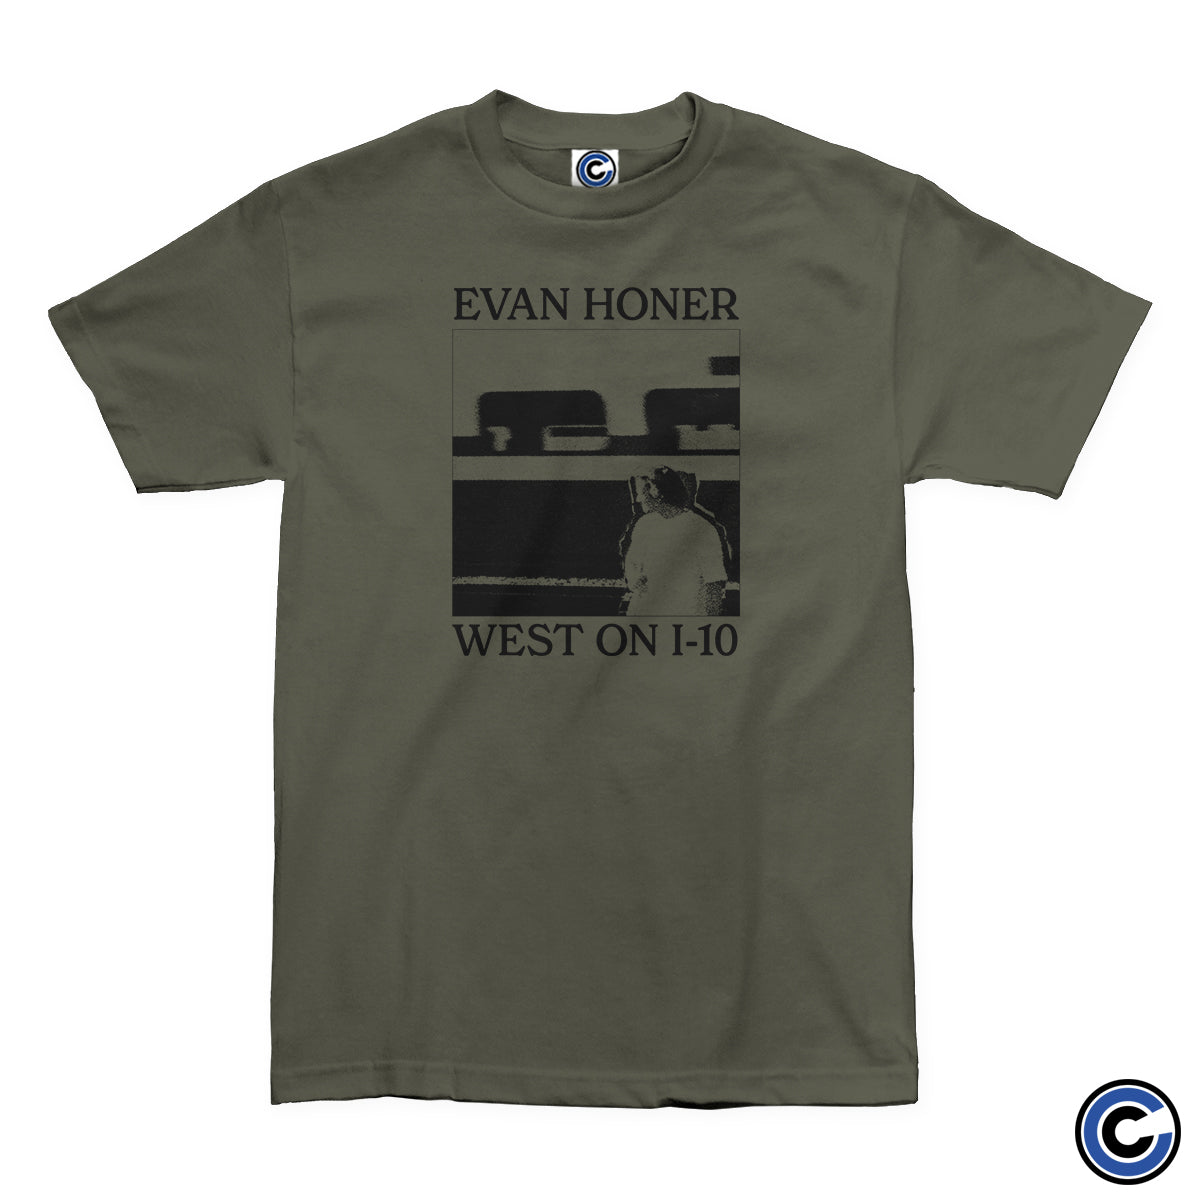 Evan Honer "West" Shirt